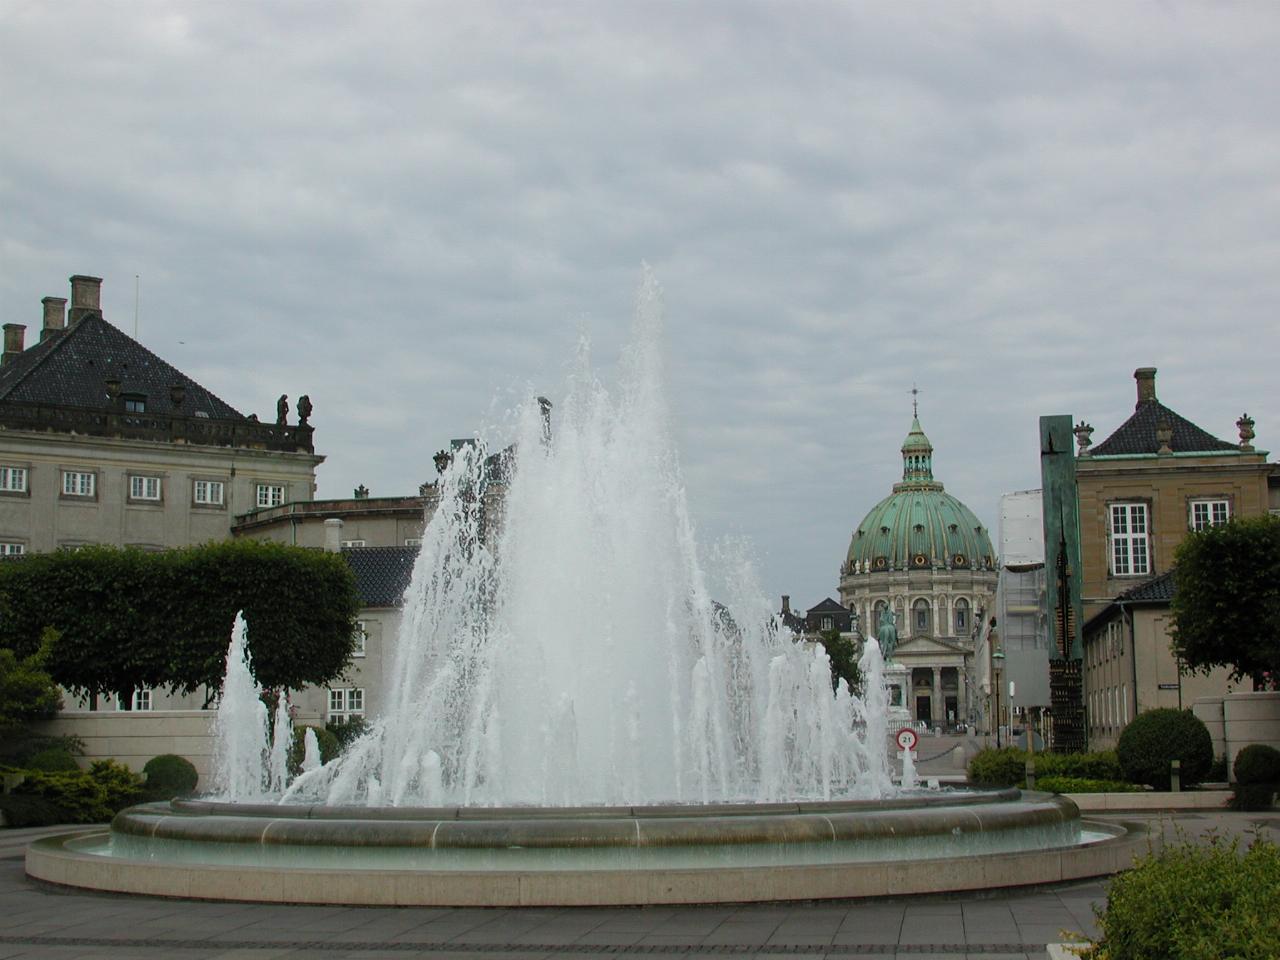 KPLU Viking Jazz: Amaliehaven fountain with Marmorkirken (officially Frederikskiren) in background.